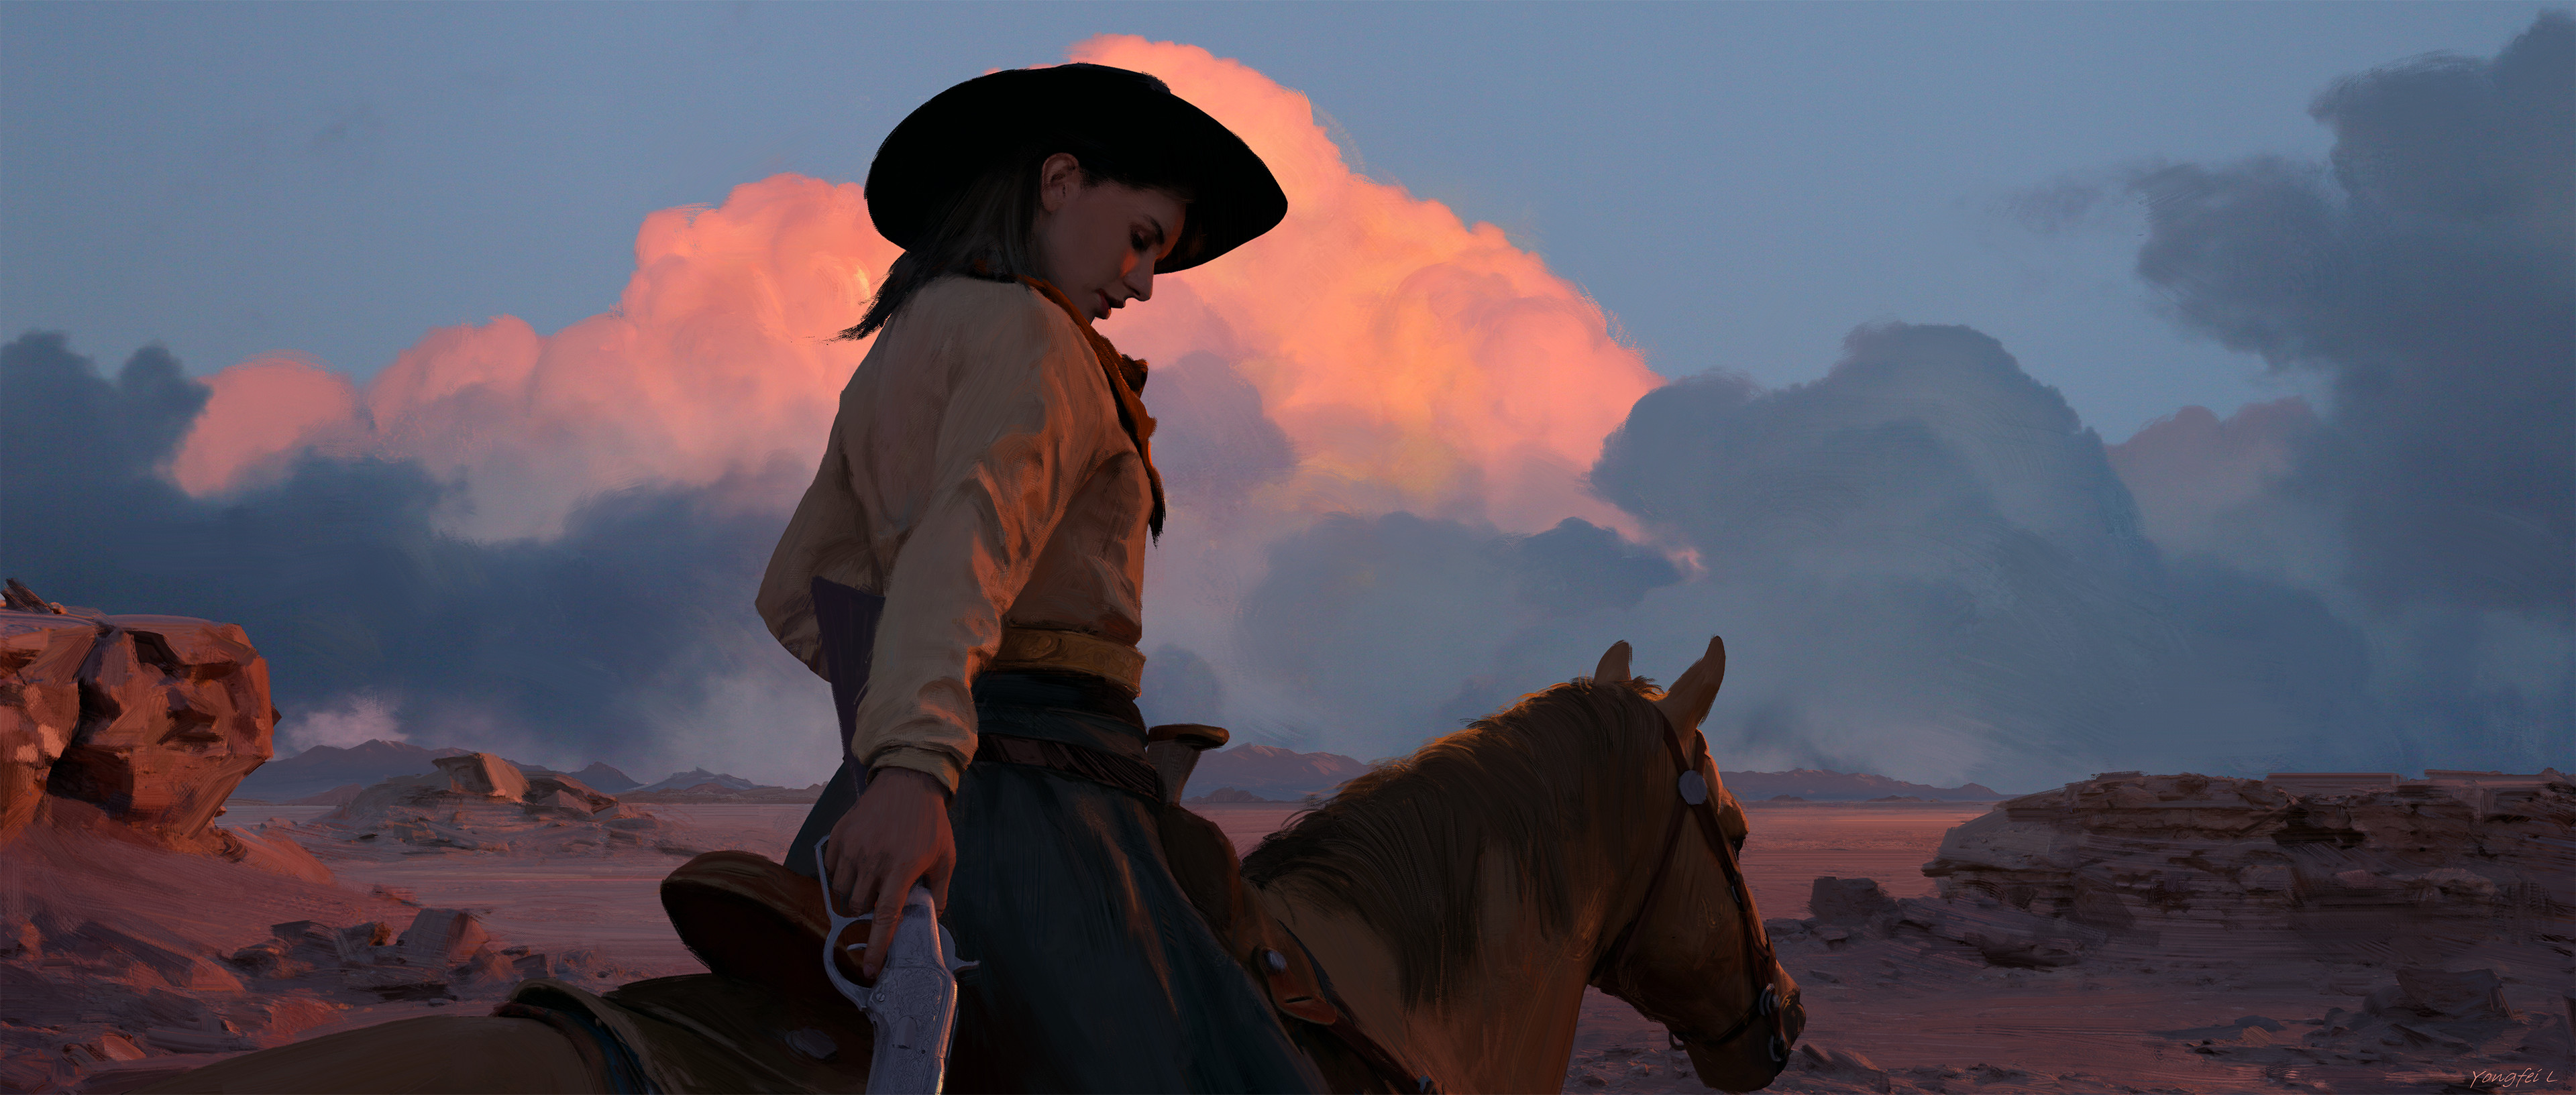 Yongfei Liu Digital 2D Digital Art Artwork Illustration Western Cowgirl Horse Women Oil Painting Gun 3840x1633